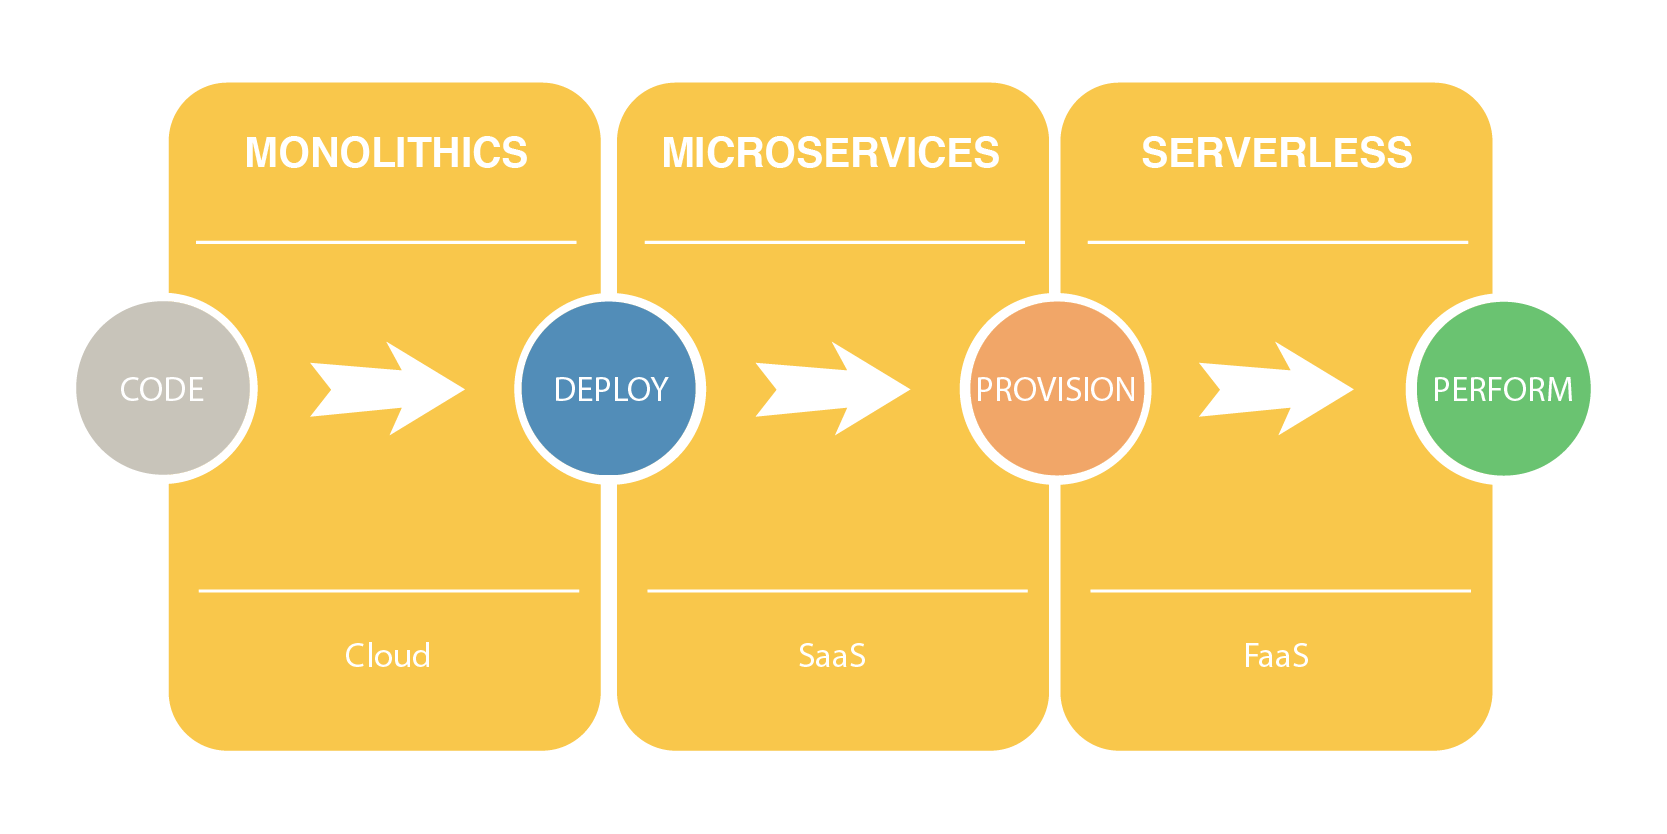 Microservices vs. Serverless Architecture